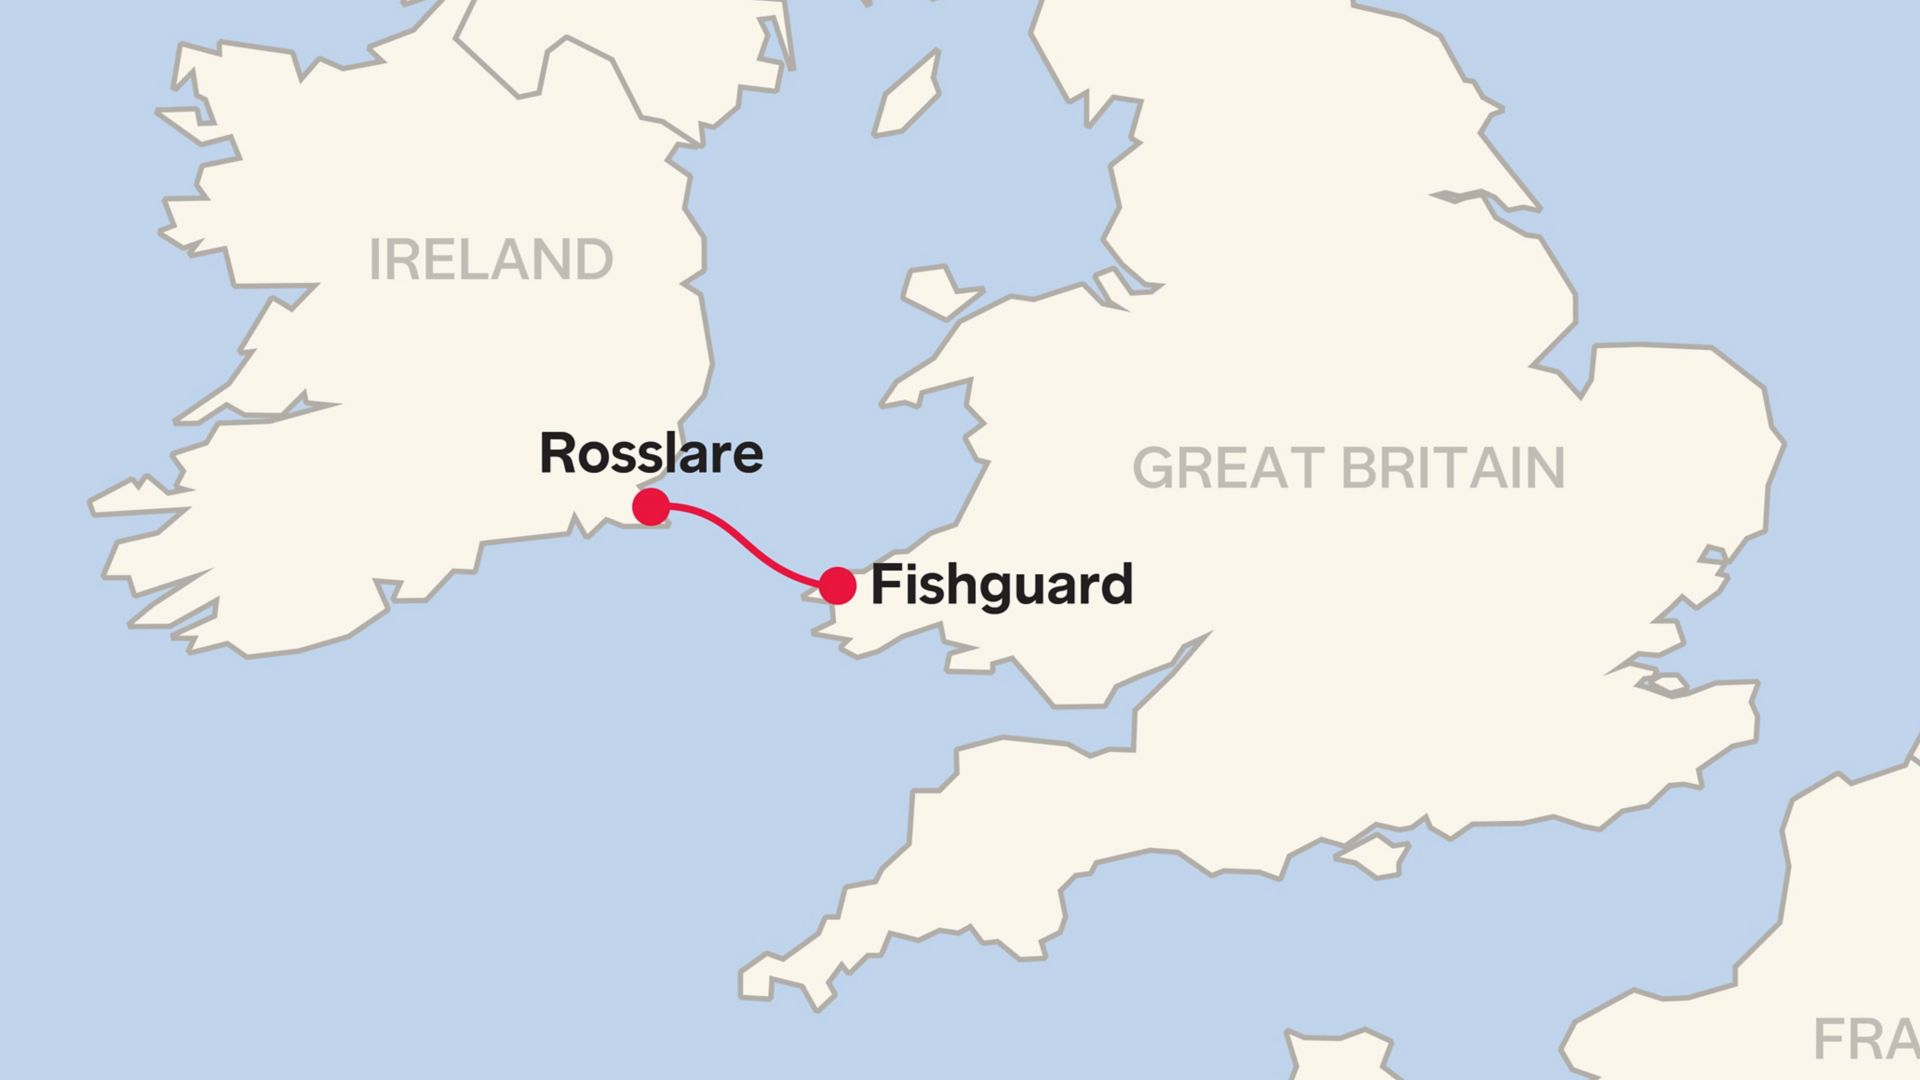 Carte des itinéraires de Stena Line Rosslare -Fishguard